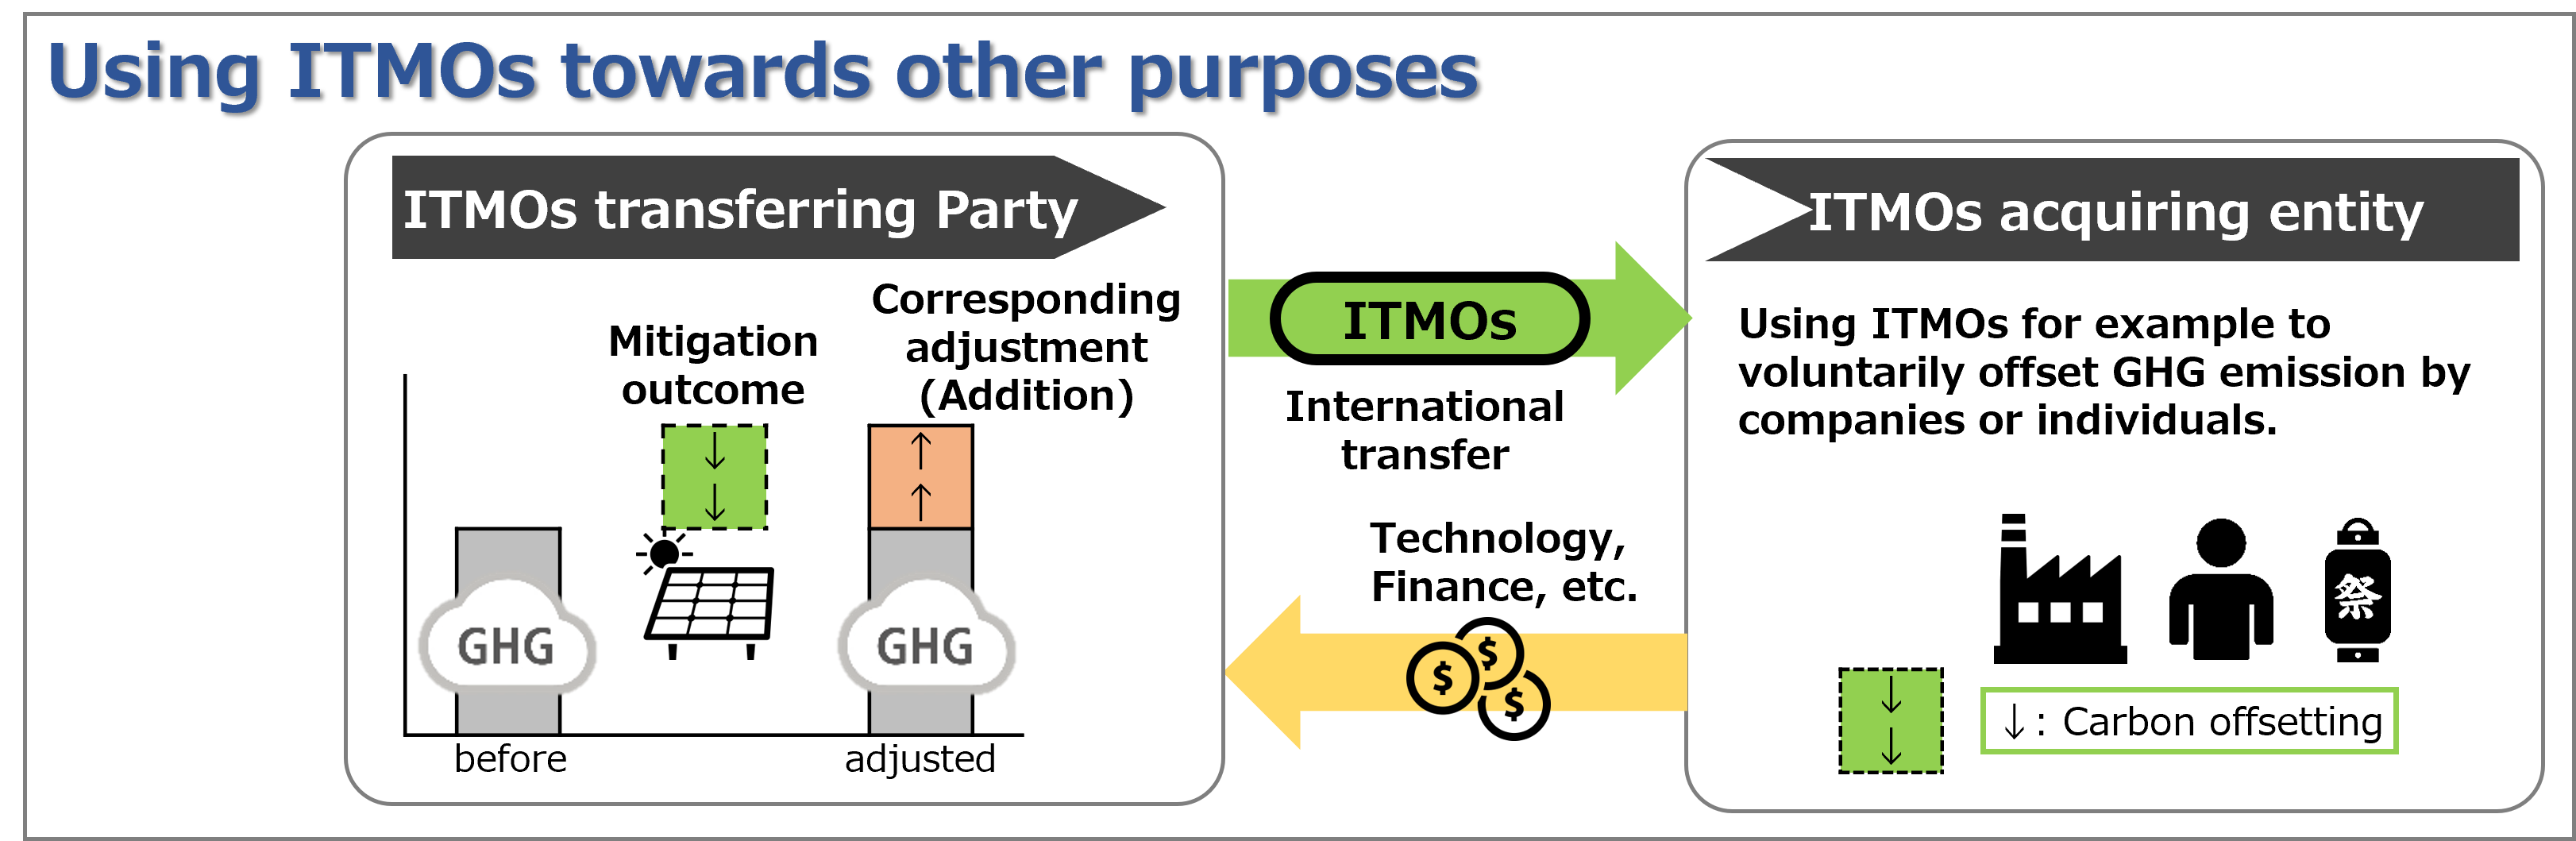 Authorization of ITMOS and corresponding adjustments